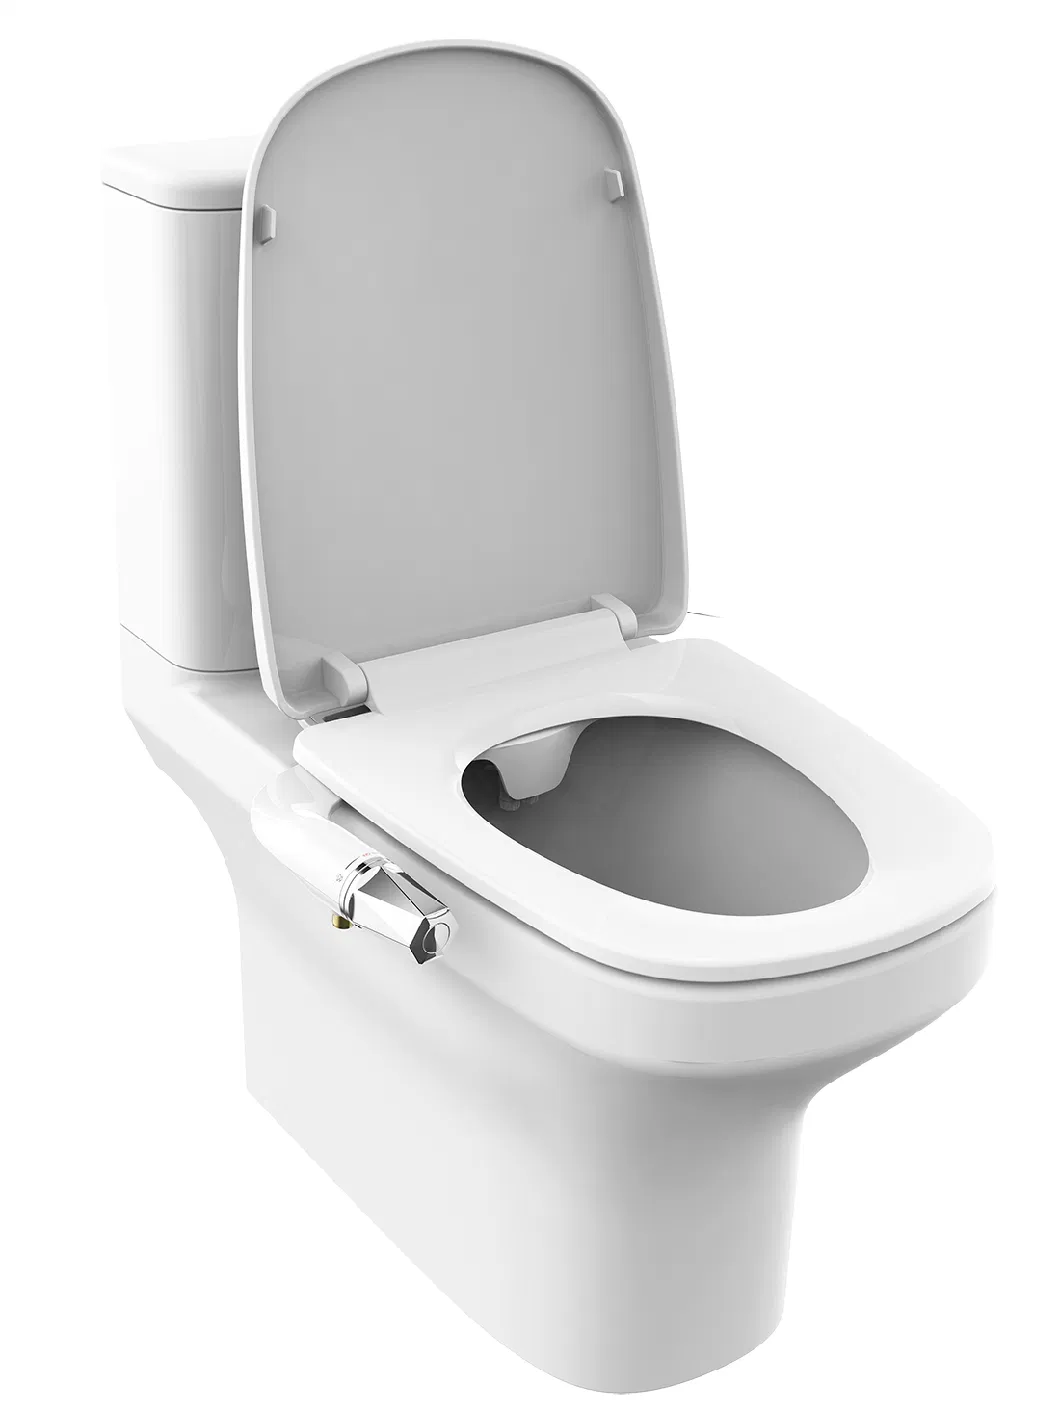 Self Clean Nozzles Cold Water Women Wash Manual Bidet Sprayer Toilet Attachment Healthy Sanitary Ware Toilet Seat Toilet Bidet